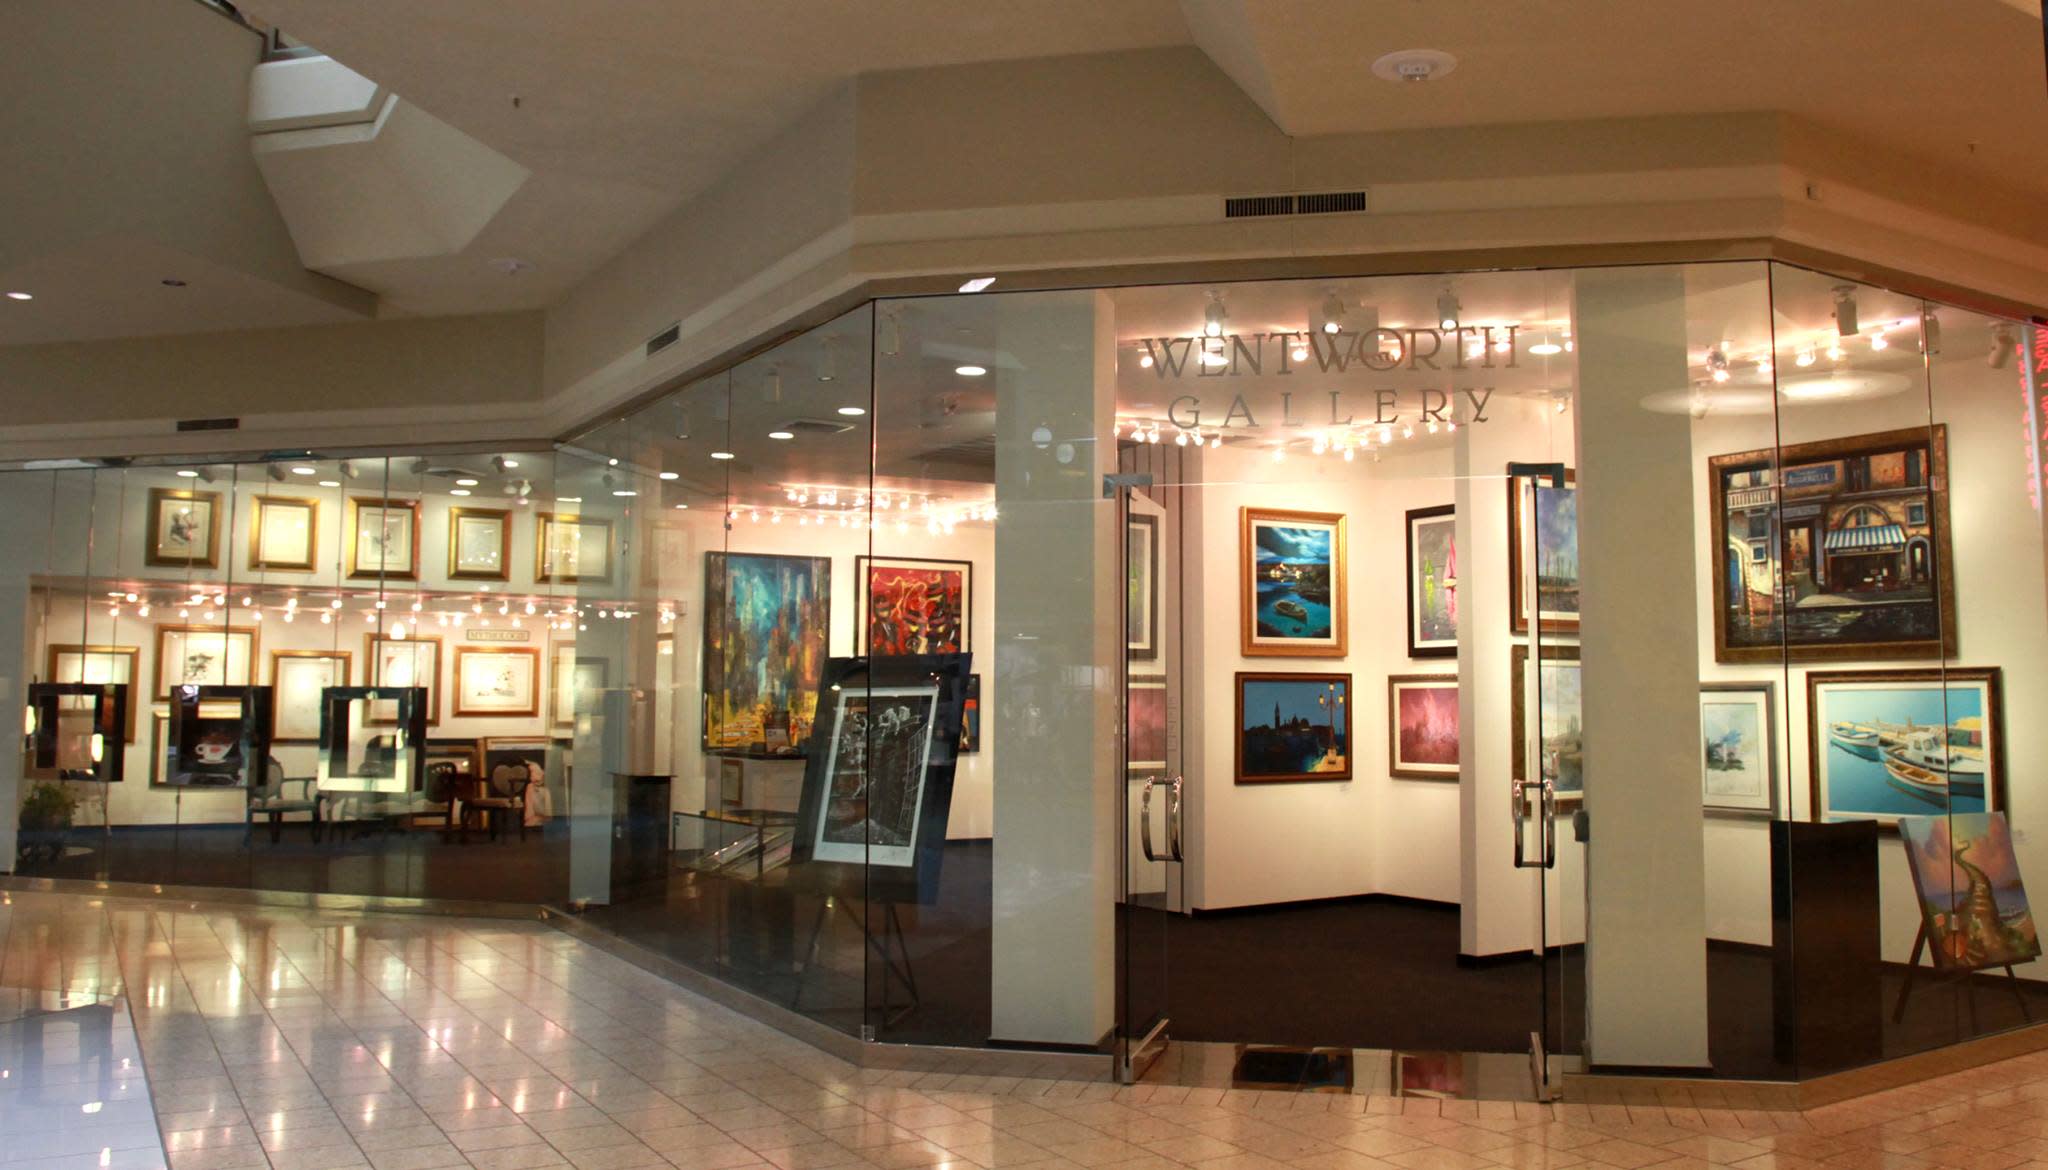 Wentworth Gallery